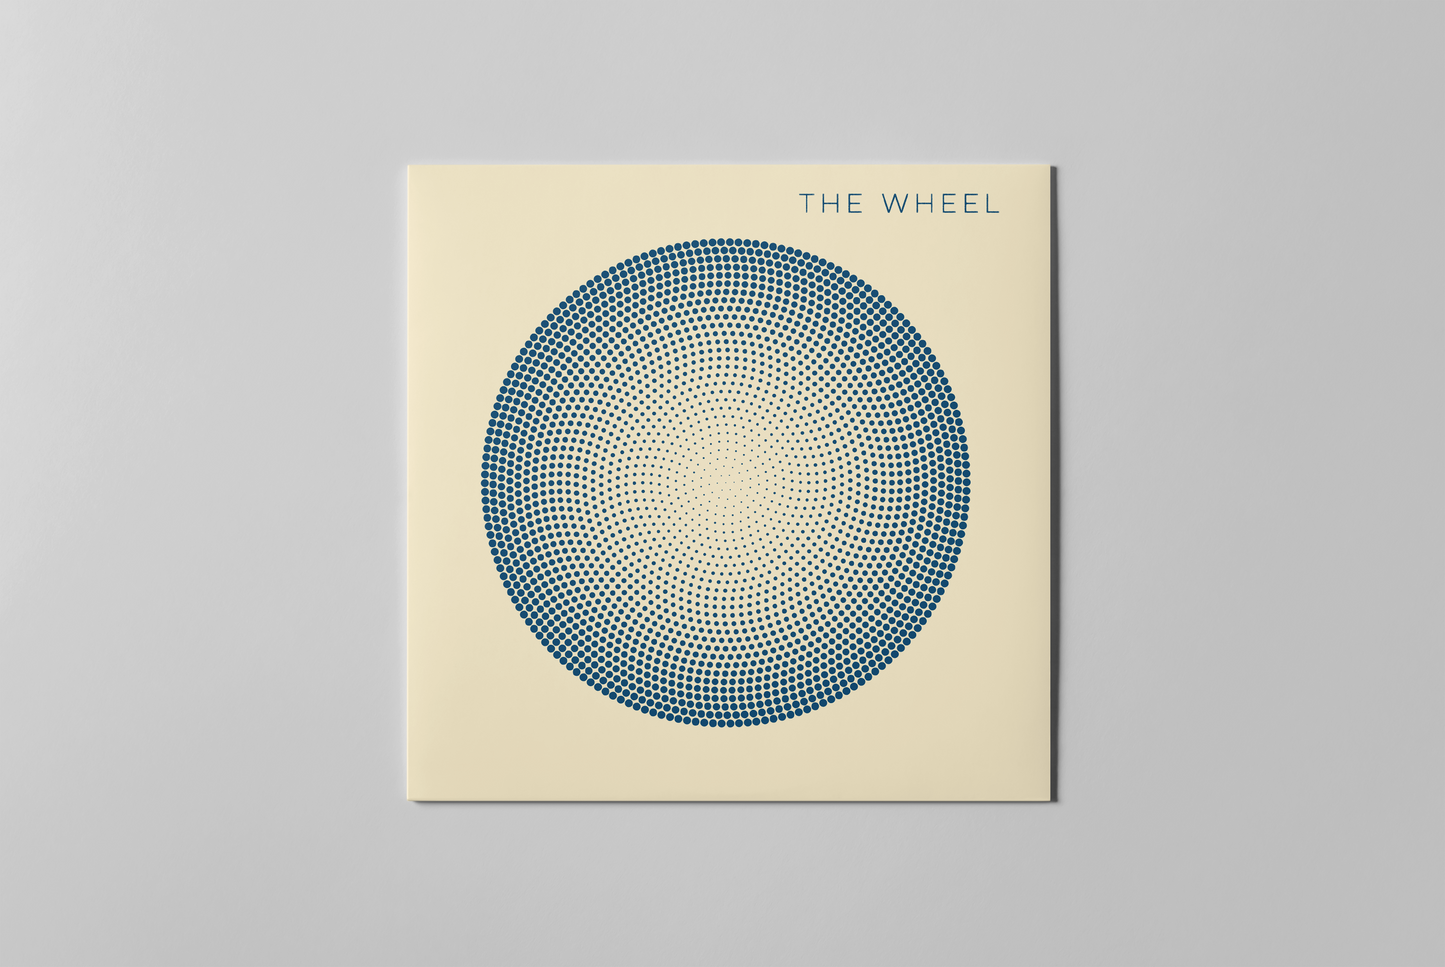 The Wheel Debut Album (180 Gram Audiophile 12 inch Black Vinyl LP)